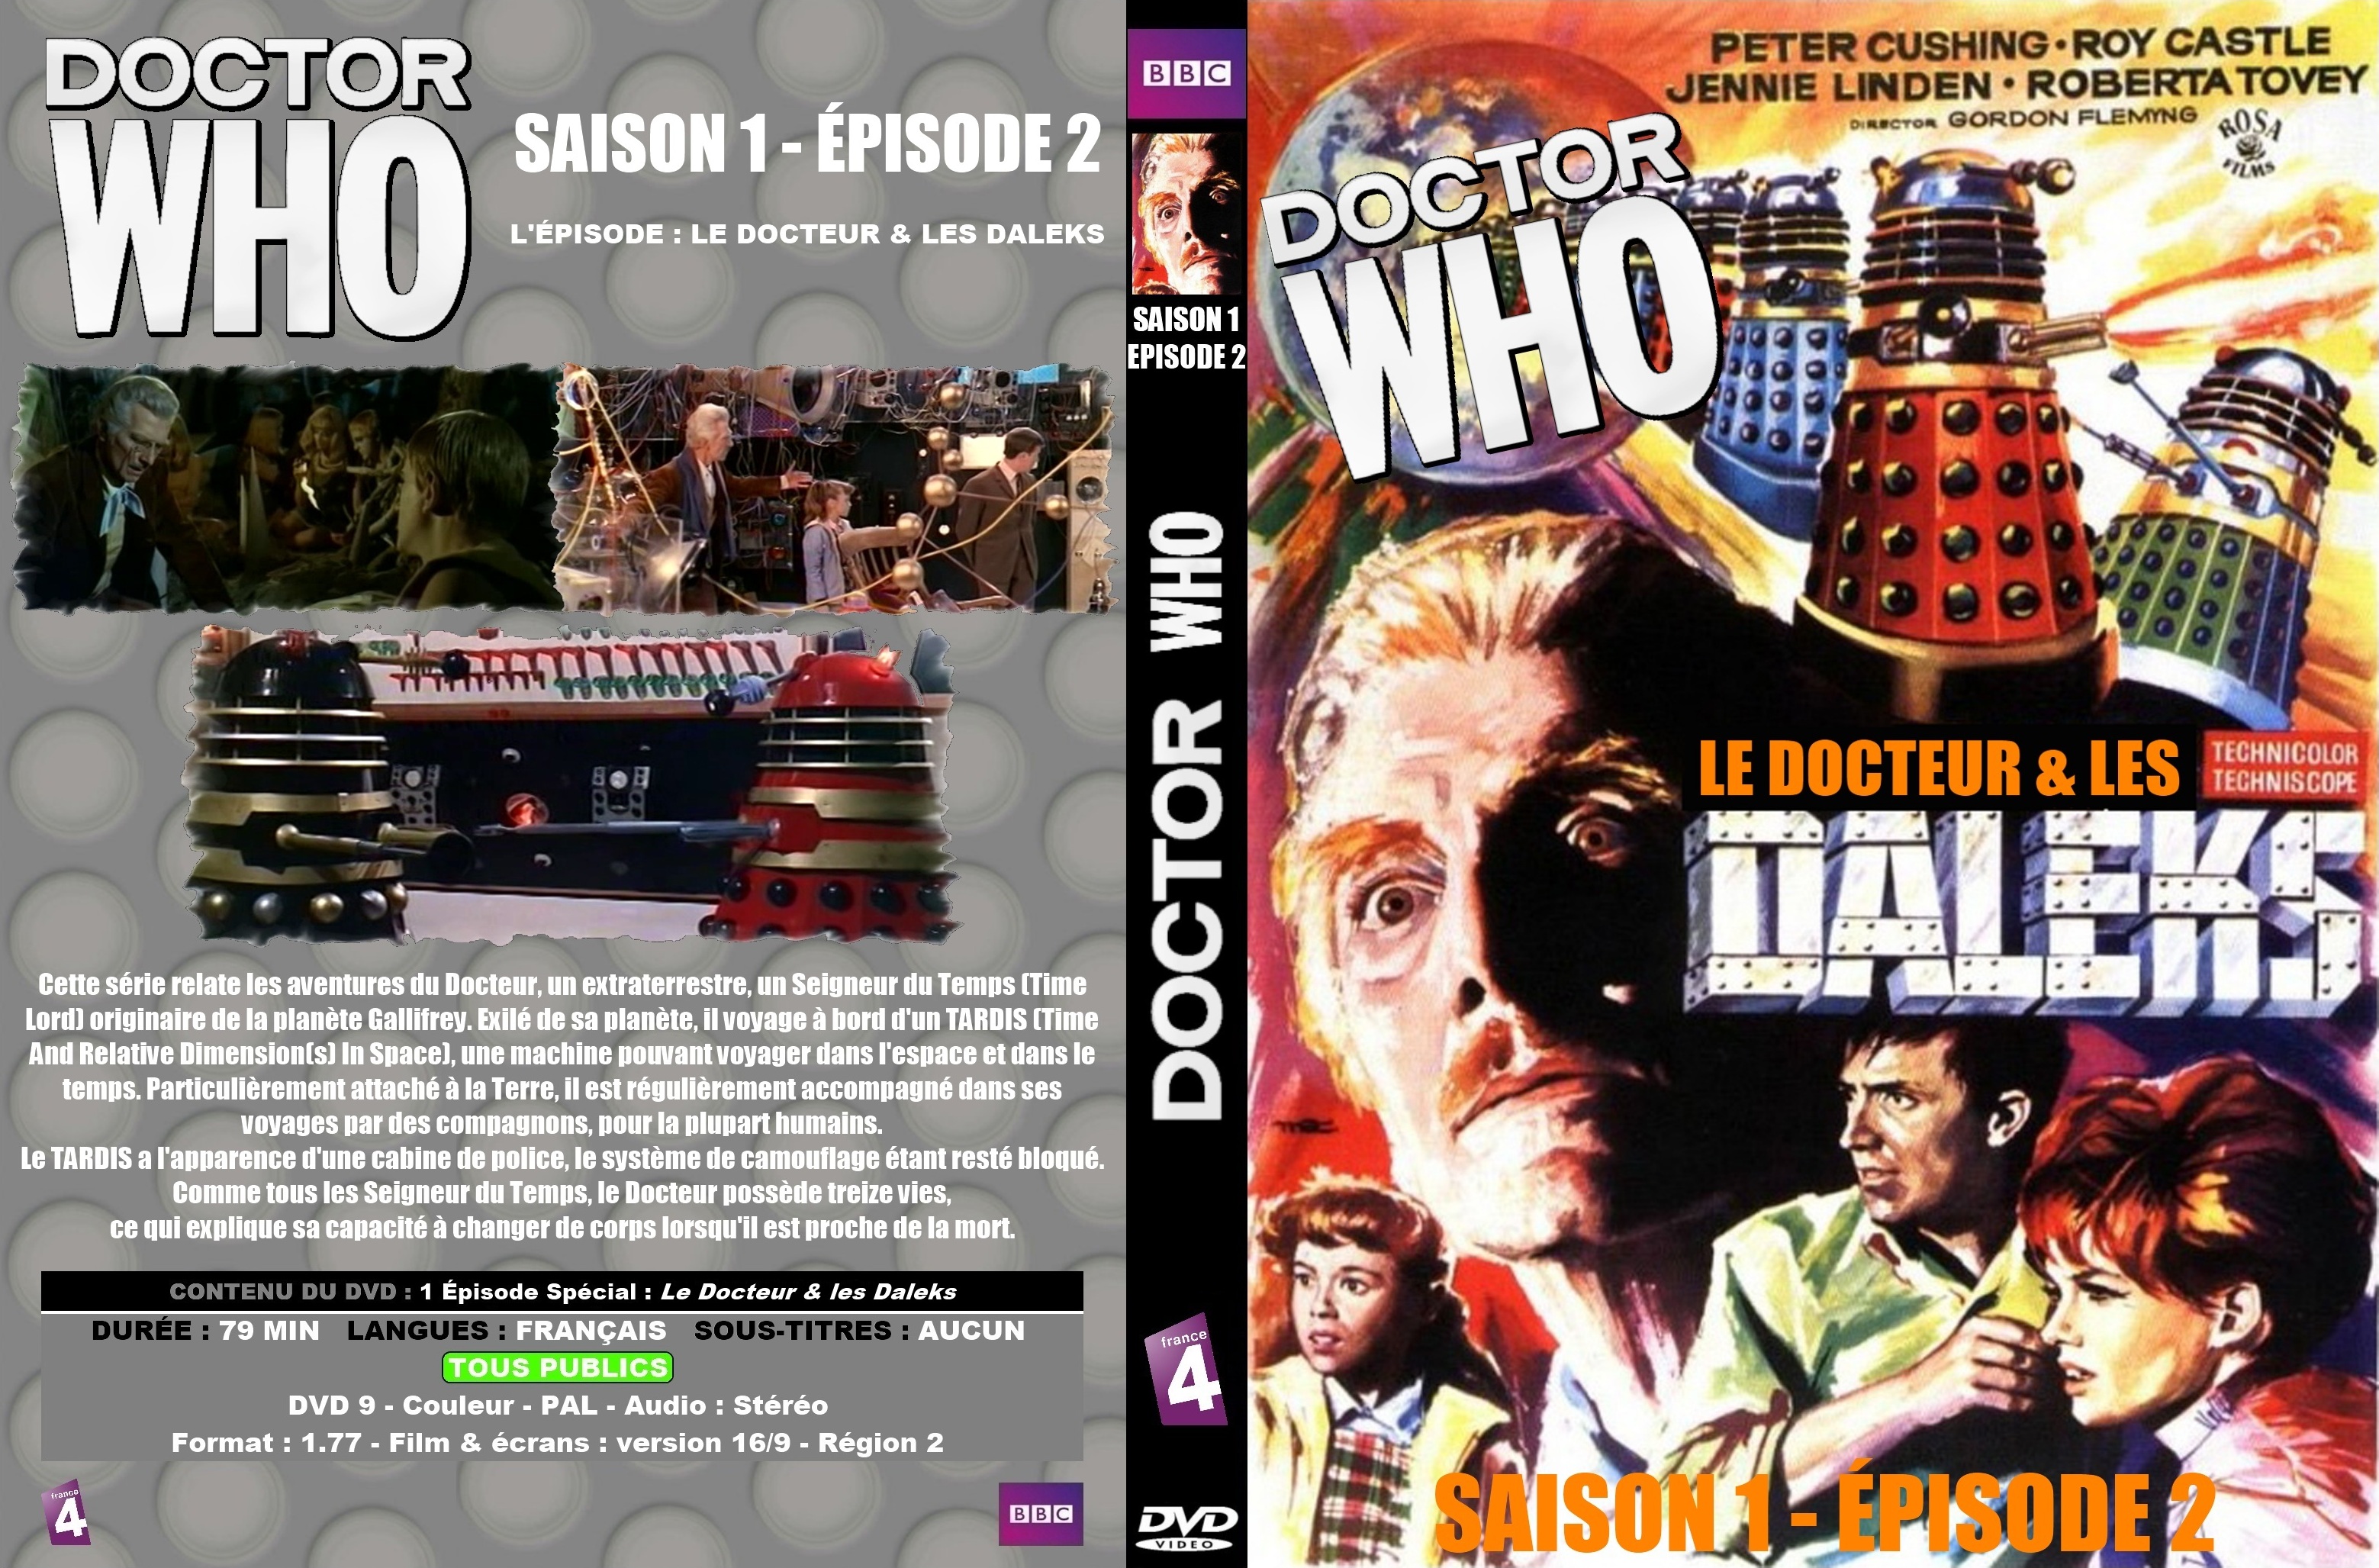 Jaquette DVD Doctor Who Classic Saison 1 pisode 2 custom